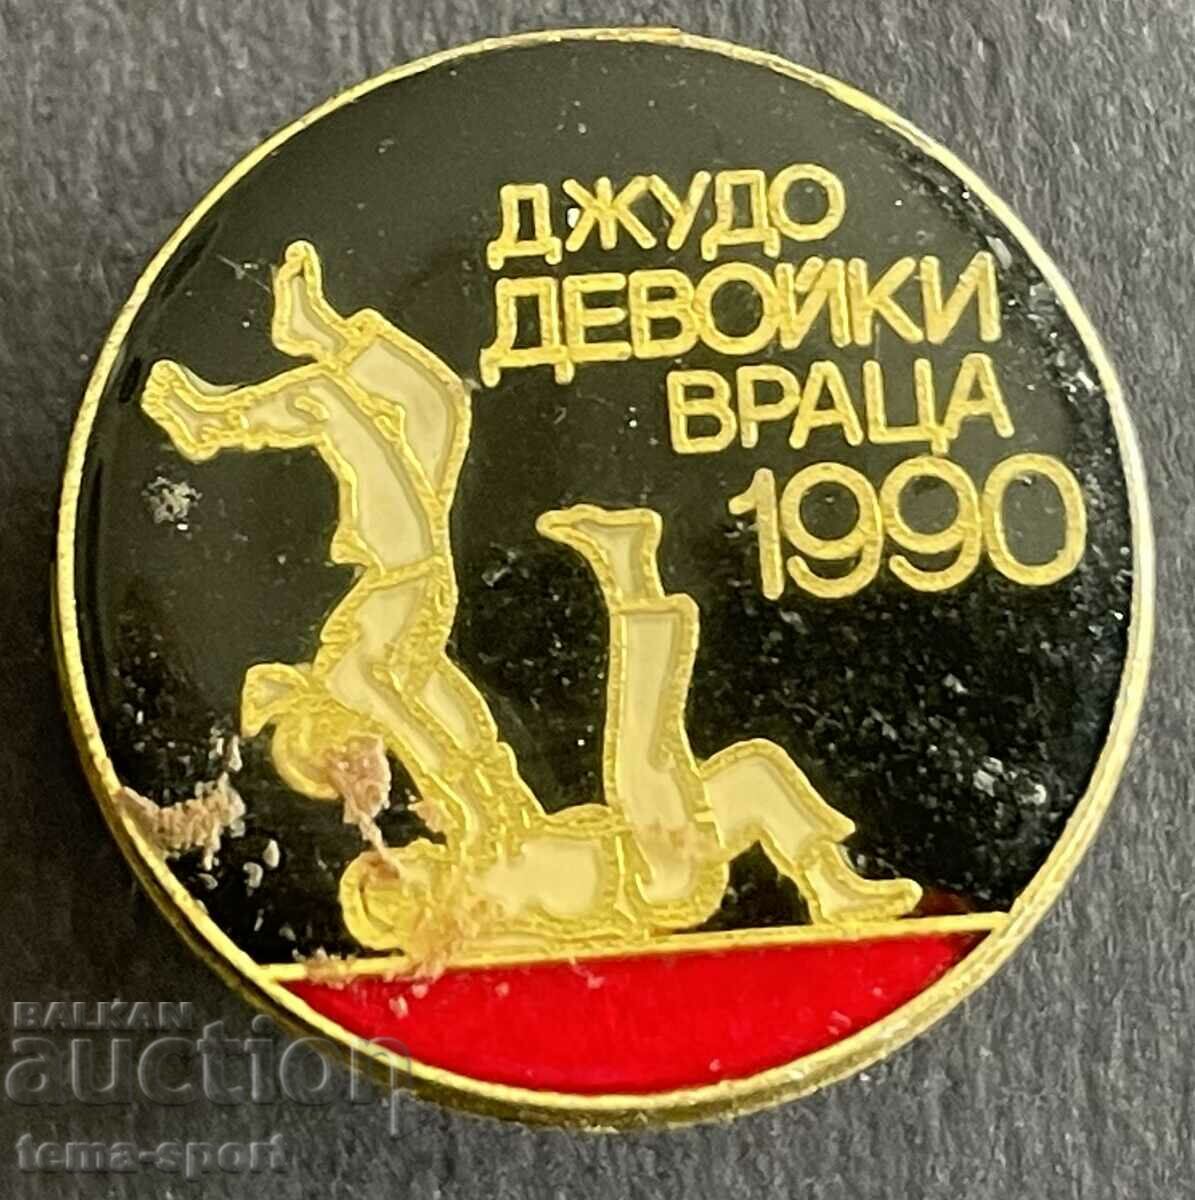 662 България знак състезания джудо град Враца 1990г.